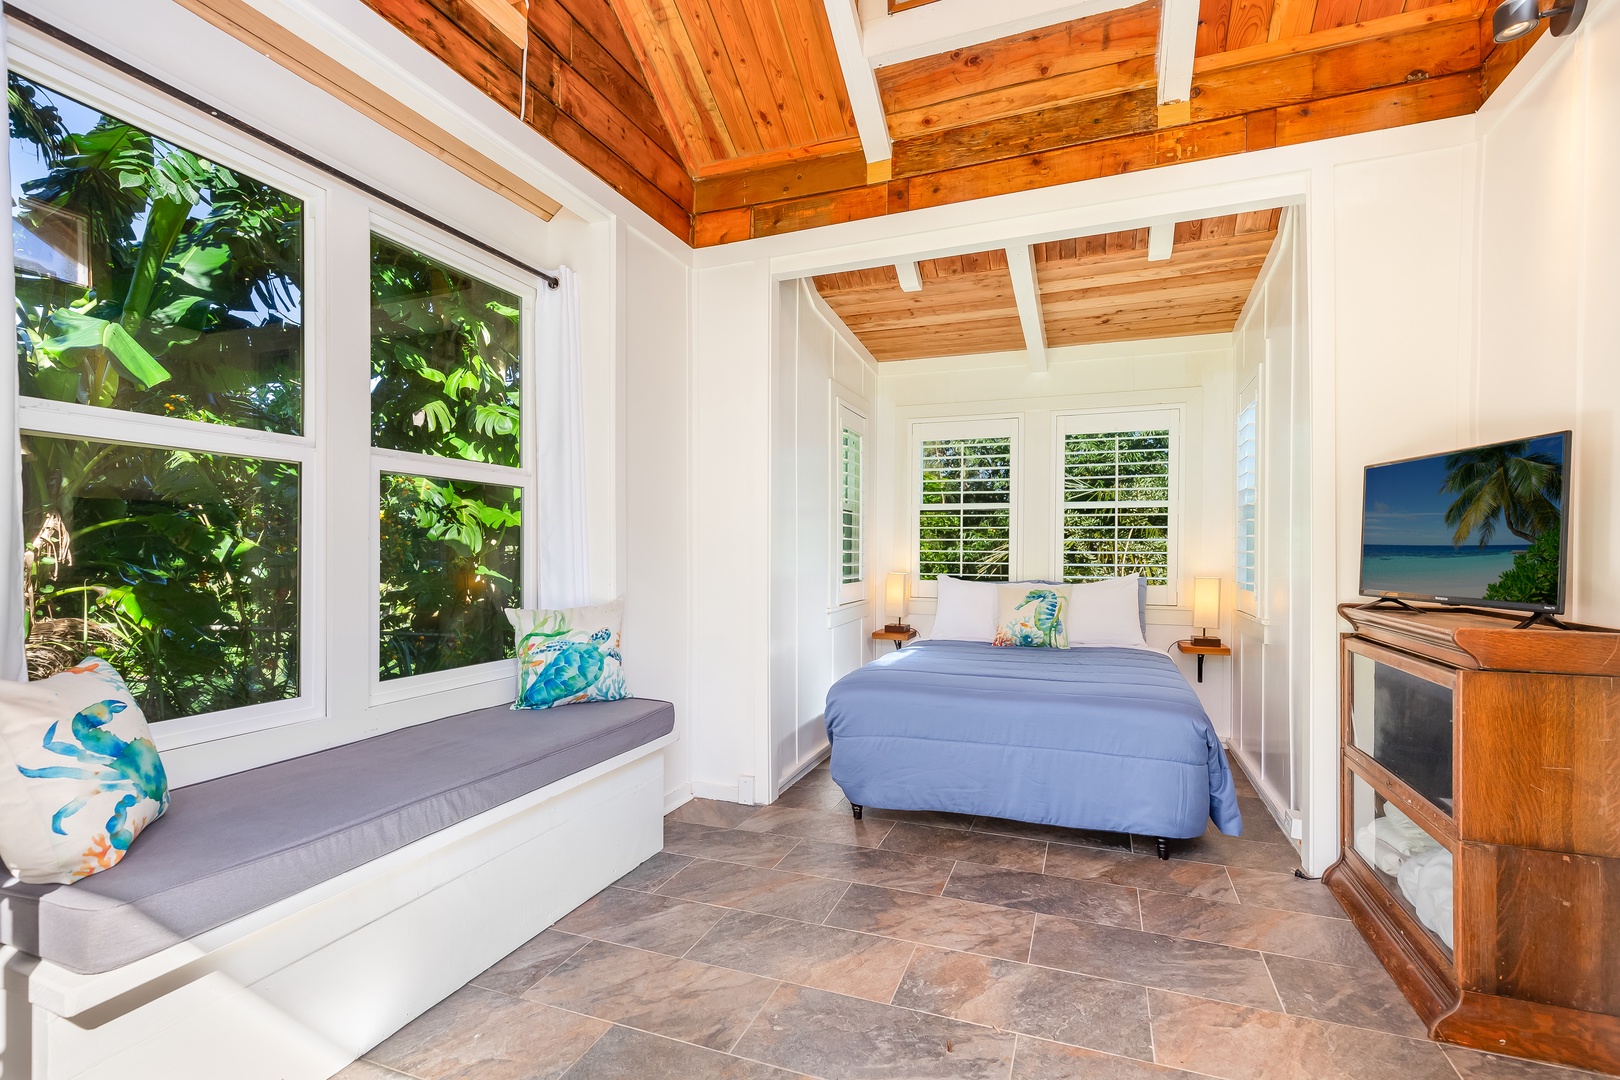 Haleiwa Vacation Rentals, Mele Makana - Guest bedroom 8 presents a queen bed & window nook with comfy bench